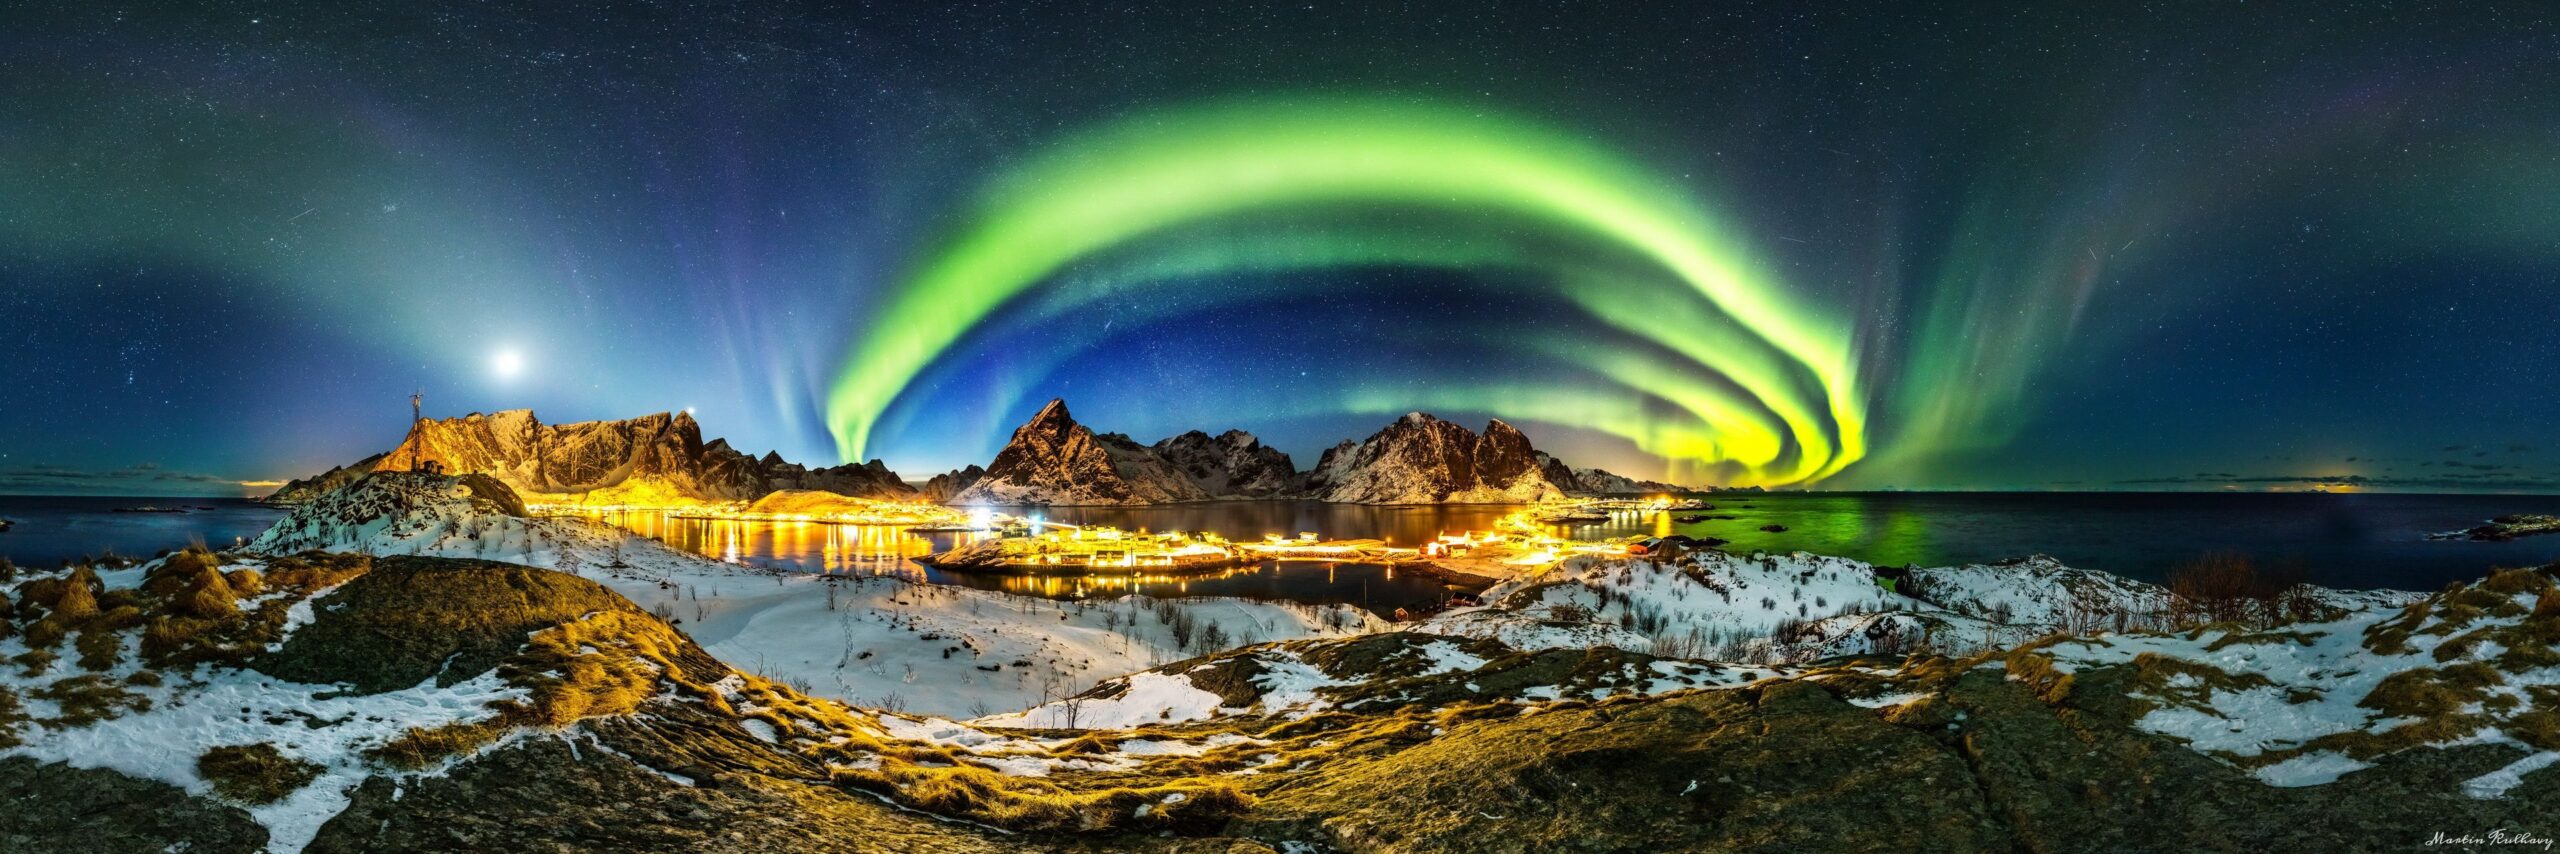 Northern Lights in Lofoten, picture taken by Martin Kulhavy